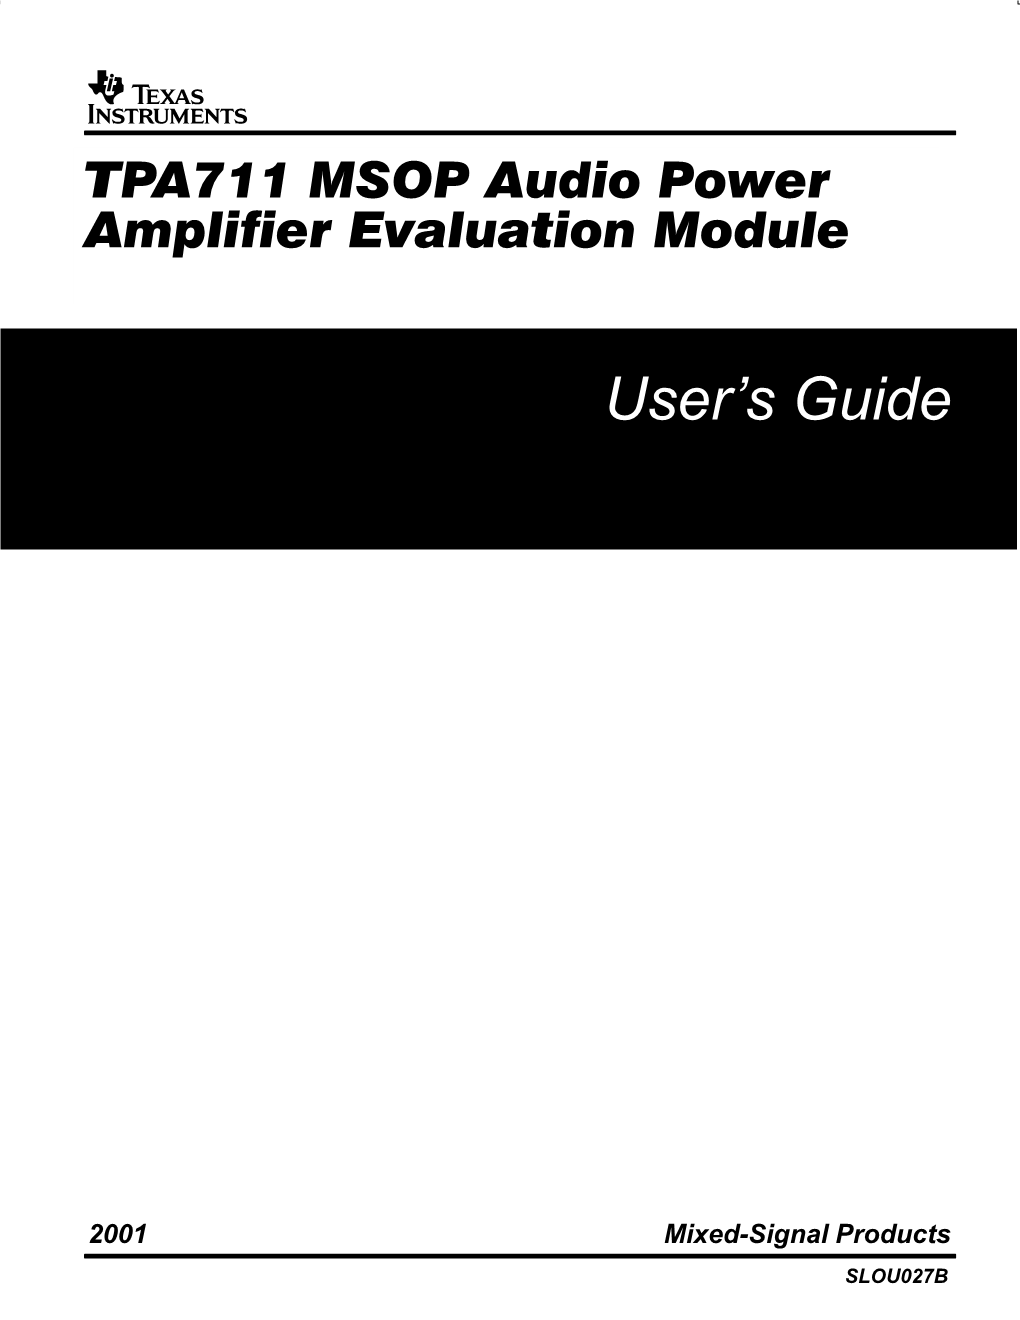 "TPA711 MSOP Audio Power Amplifier Evaluation Module User's Guide"